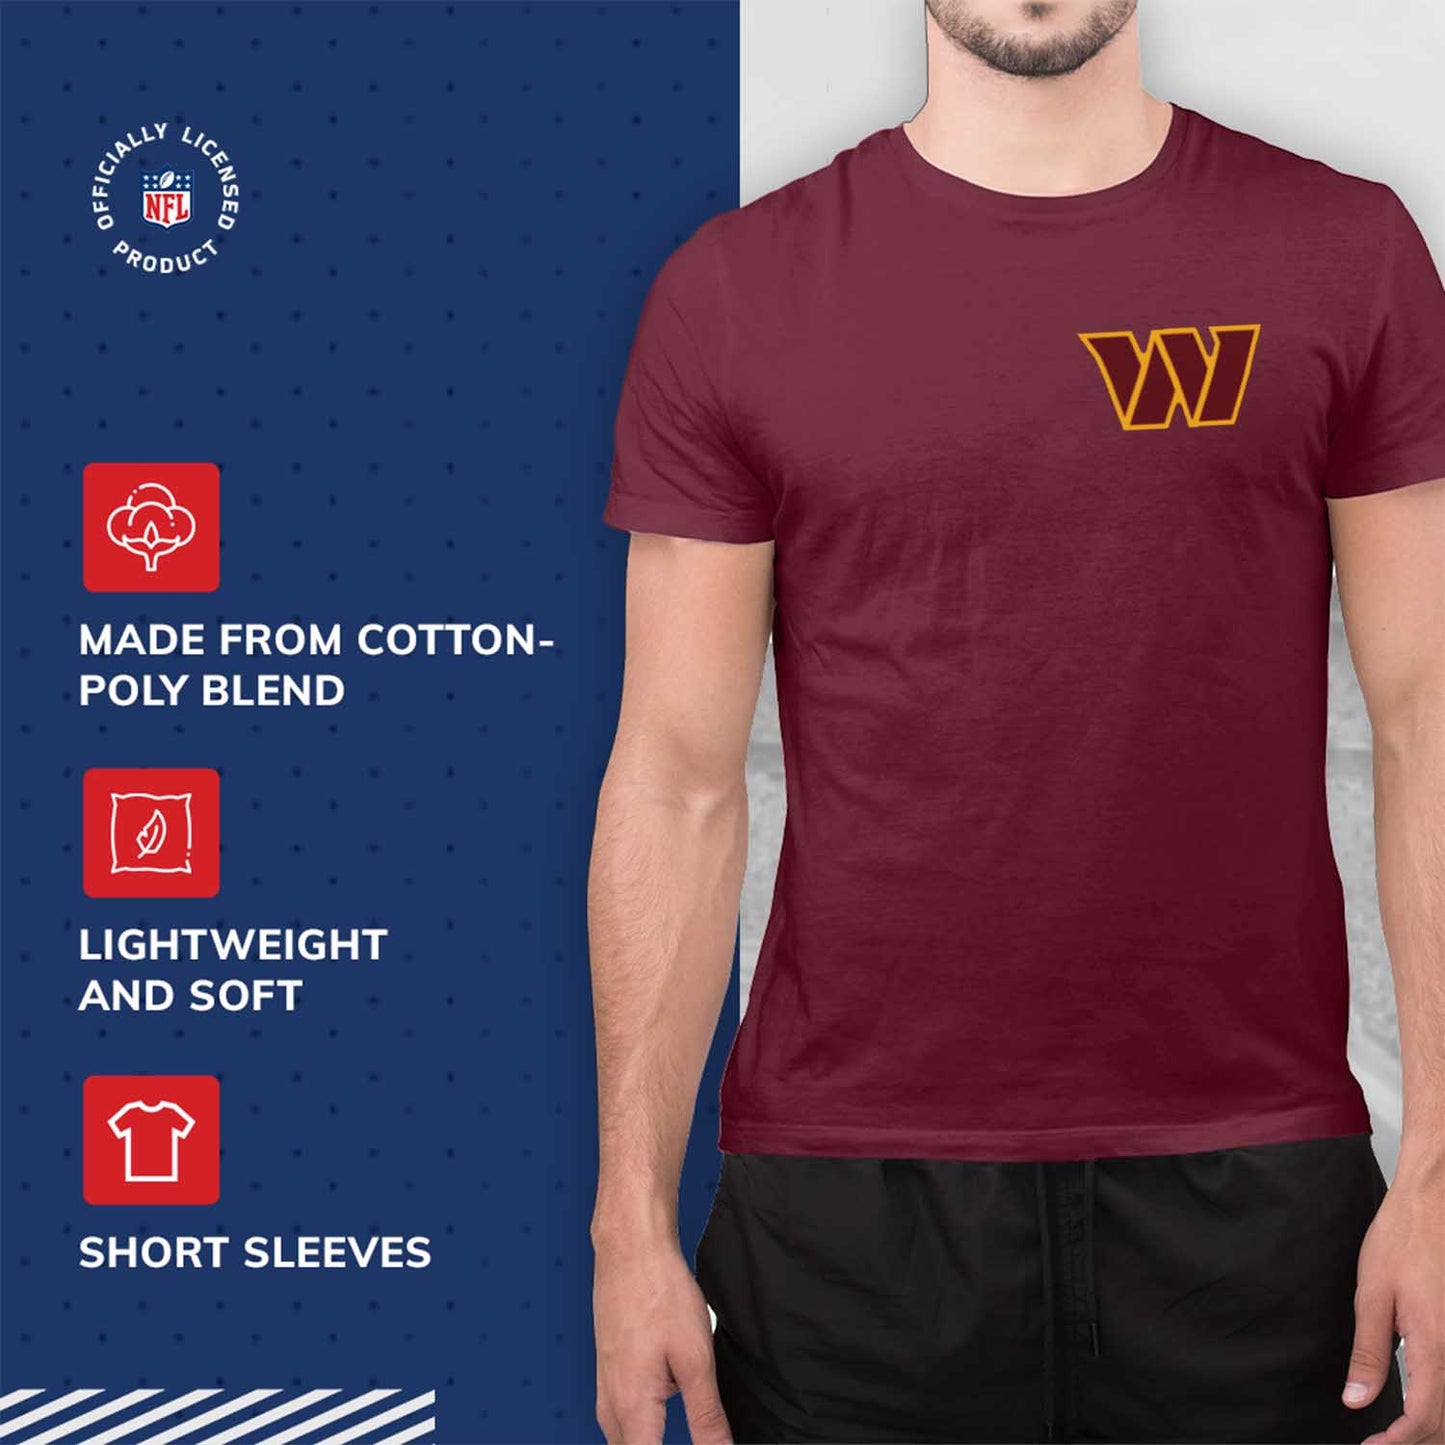 Washington Commanders NFL Pro Football Final Countdown Adult Cotton-Poly Short Sleeved T-Shirt For Men & Women - Cardinal